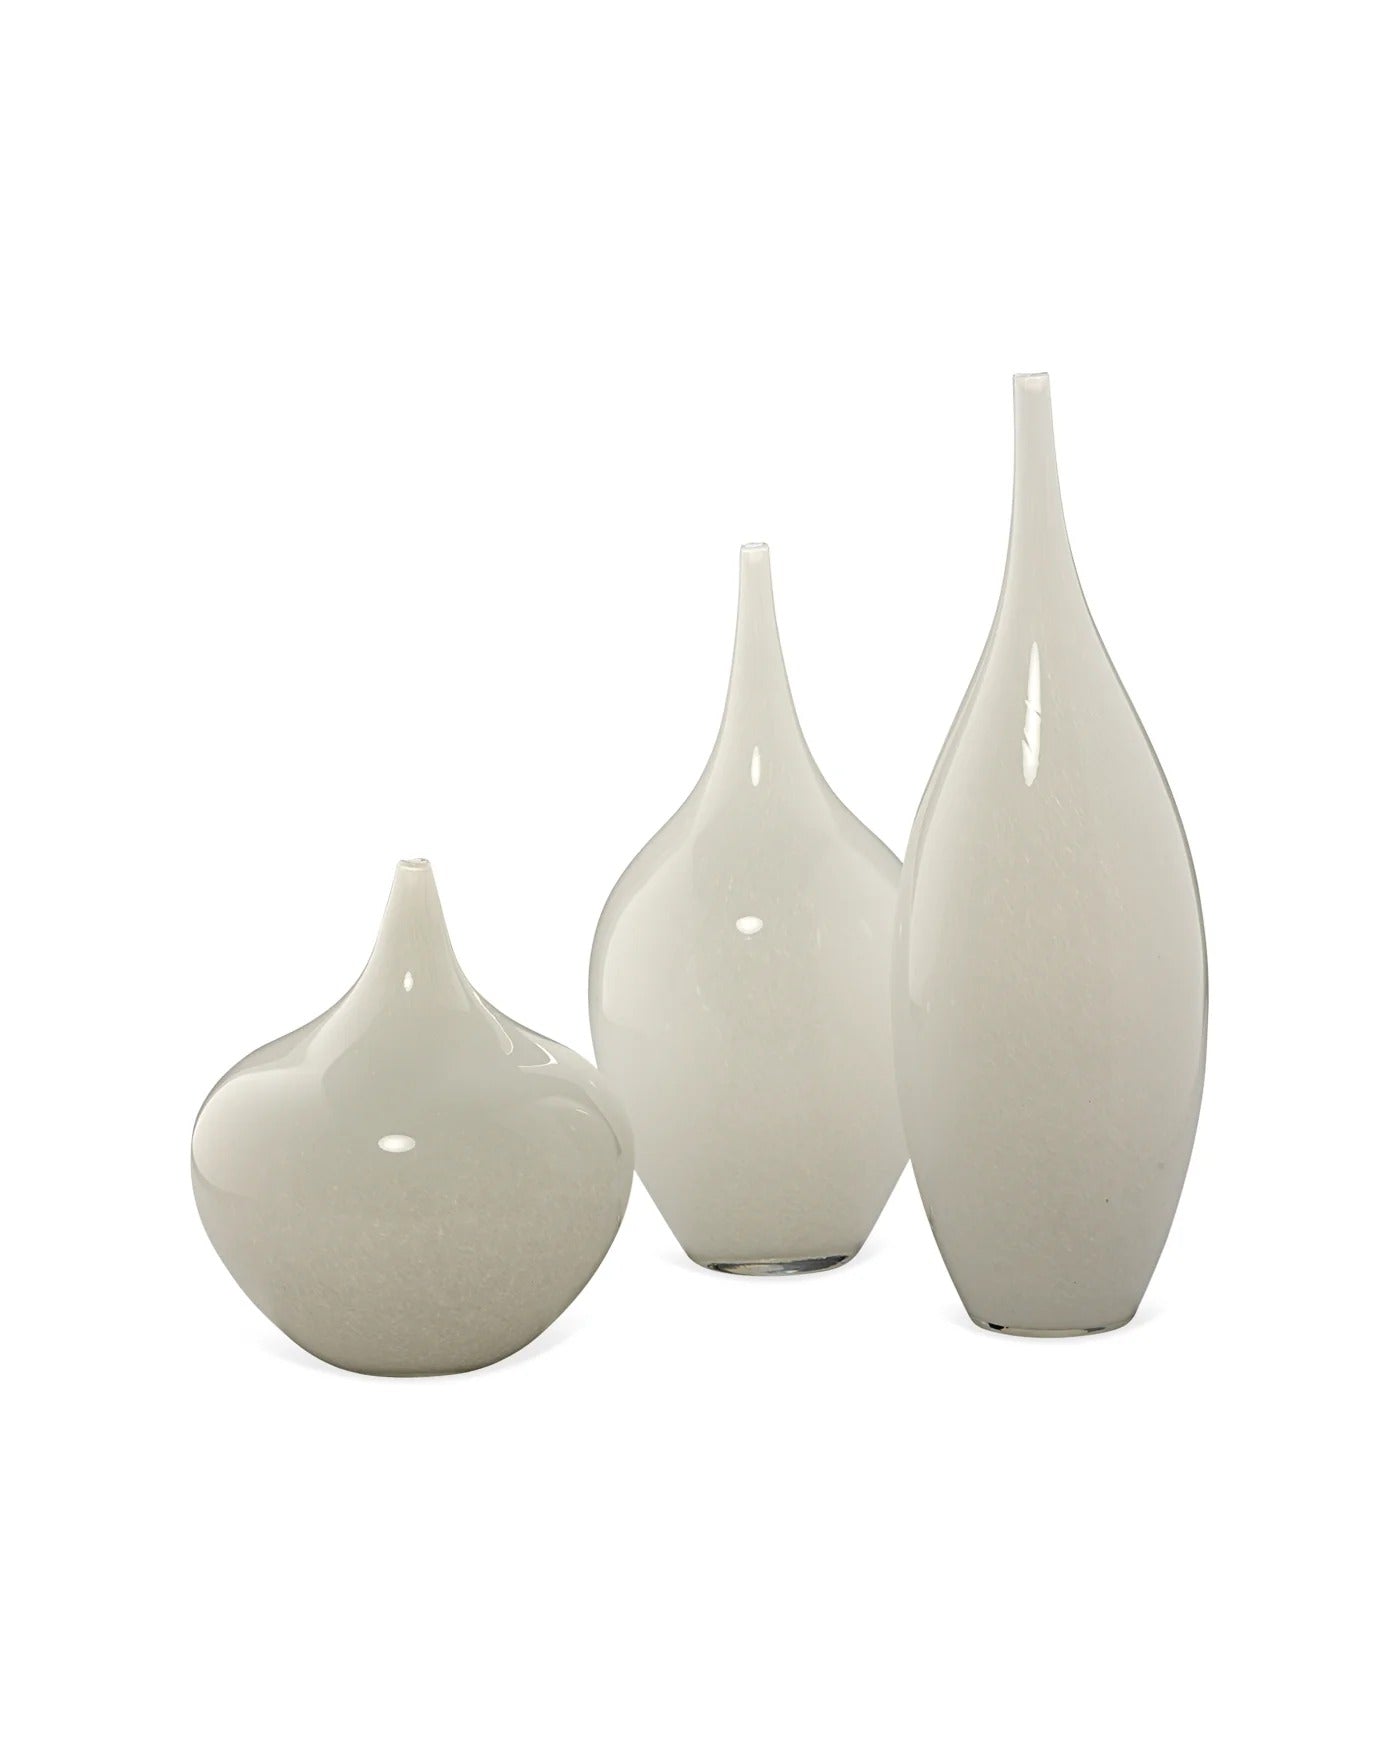 Nymph Decorative Vases Set of 3 - White